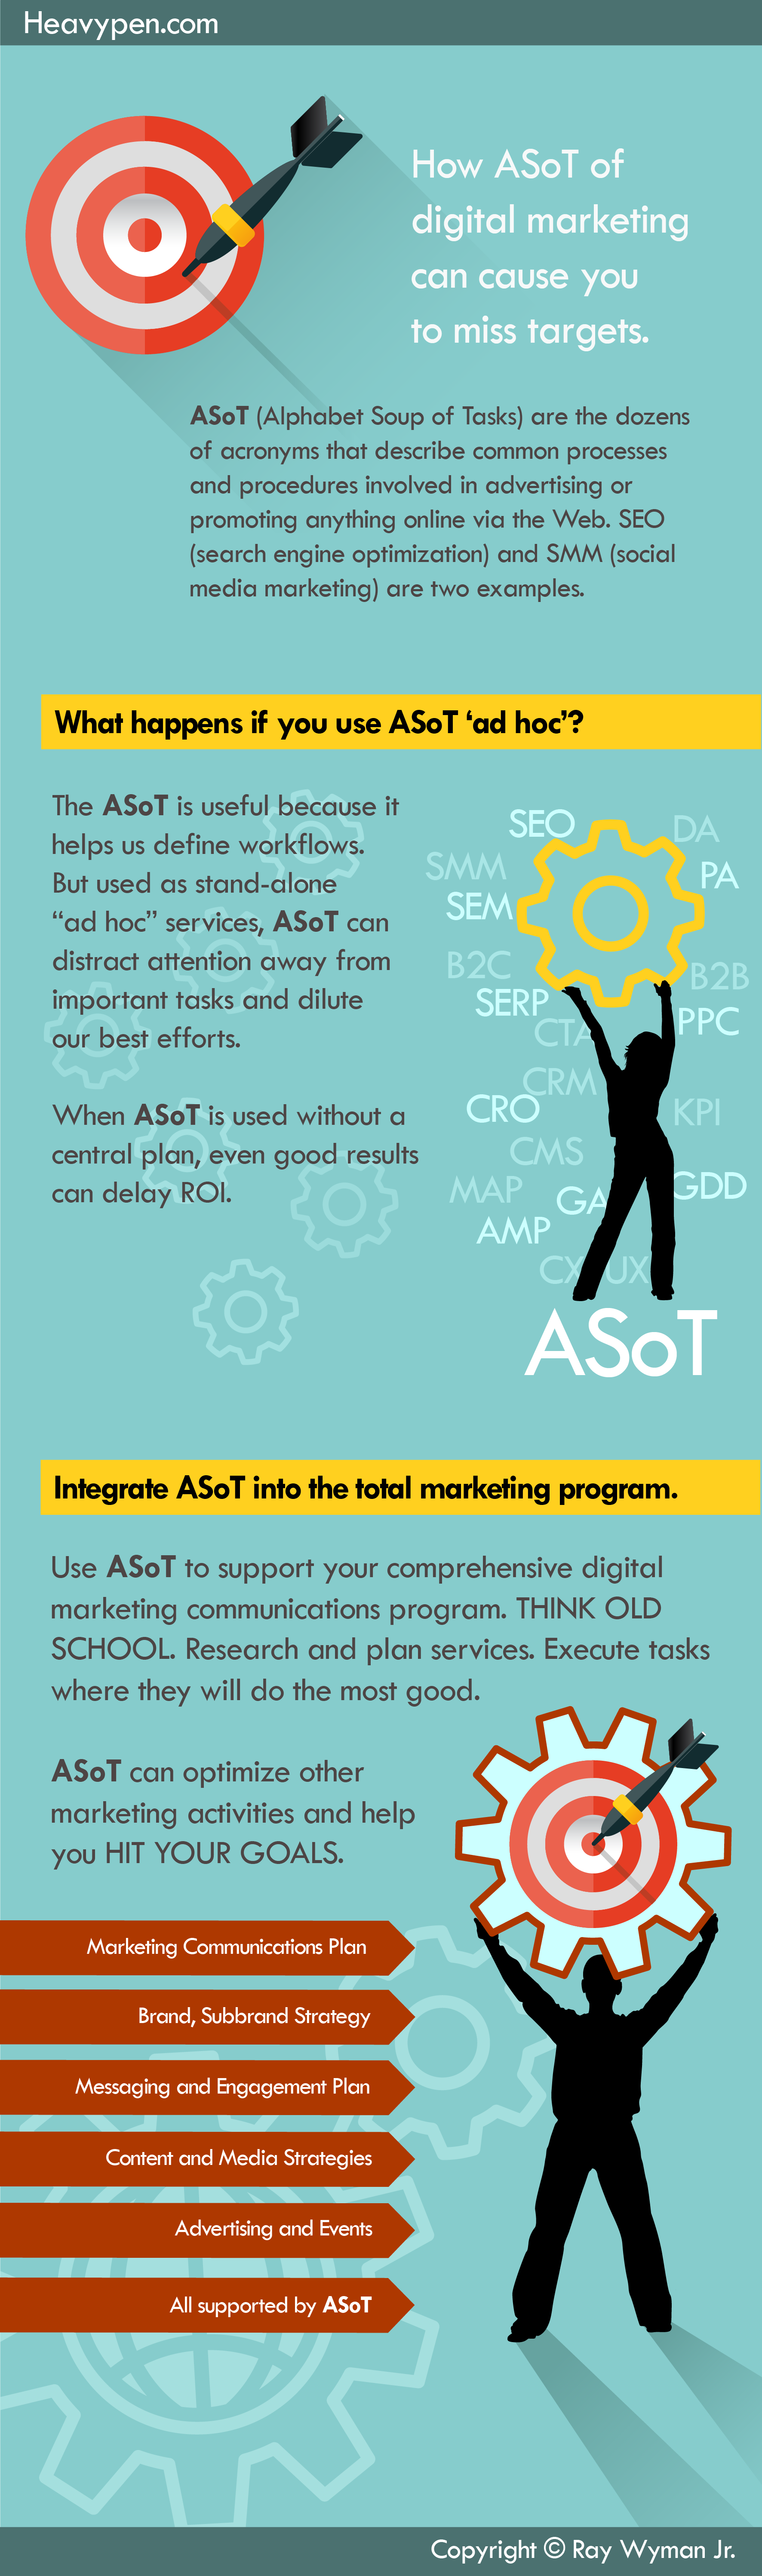 ASoT of digital marketing